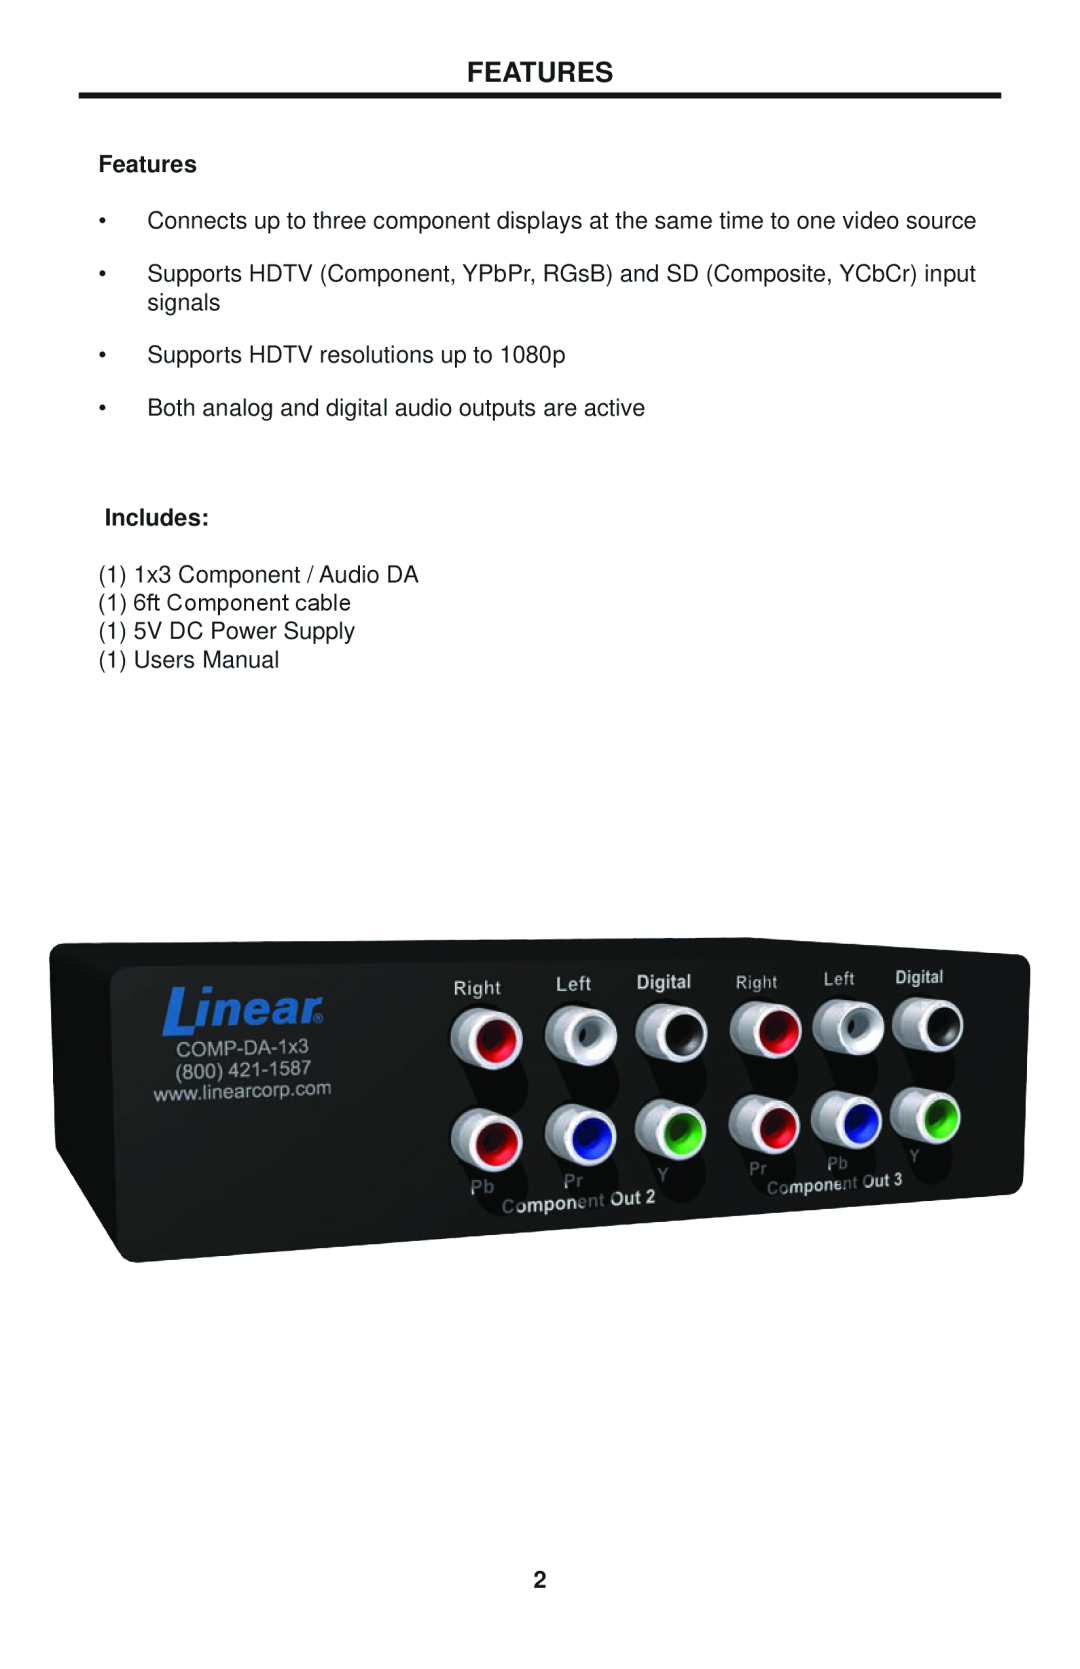 Linear COMP-DA-1X3 user manual Features, Includes 